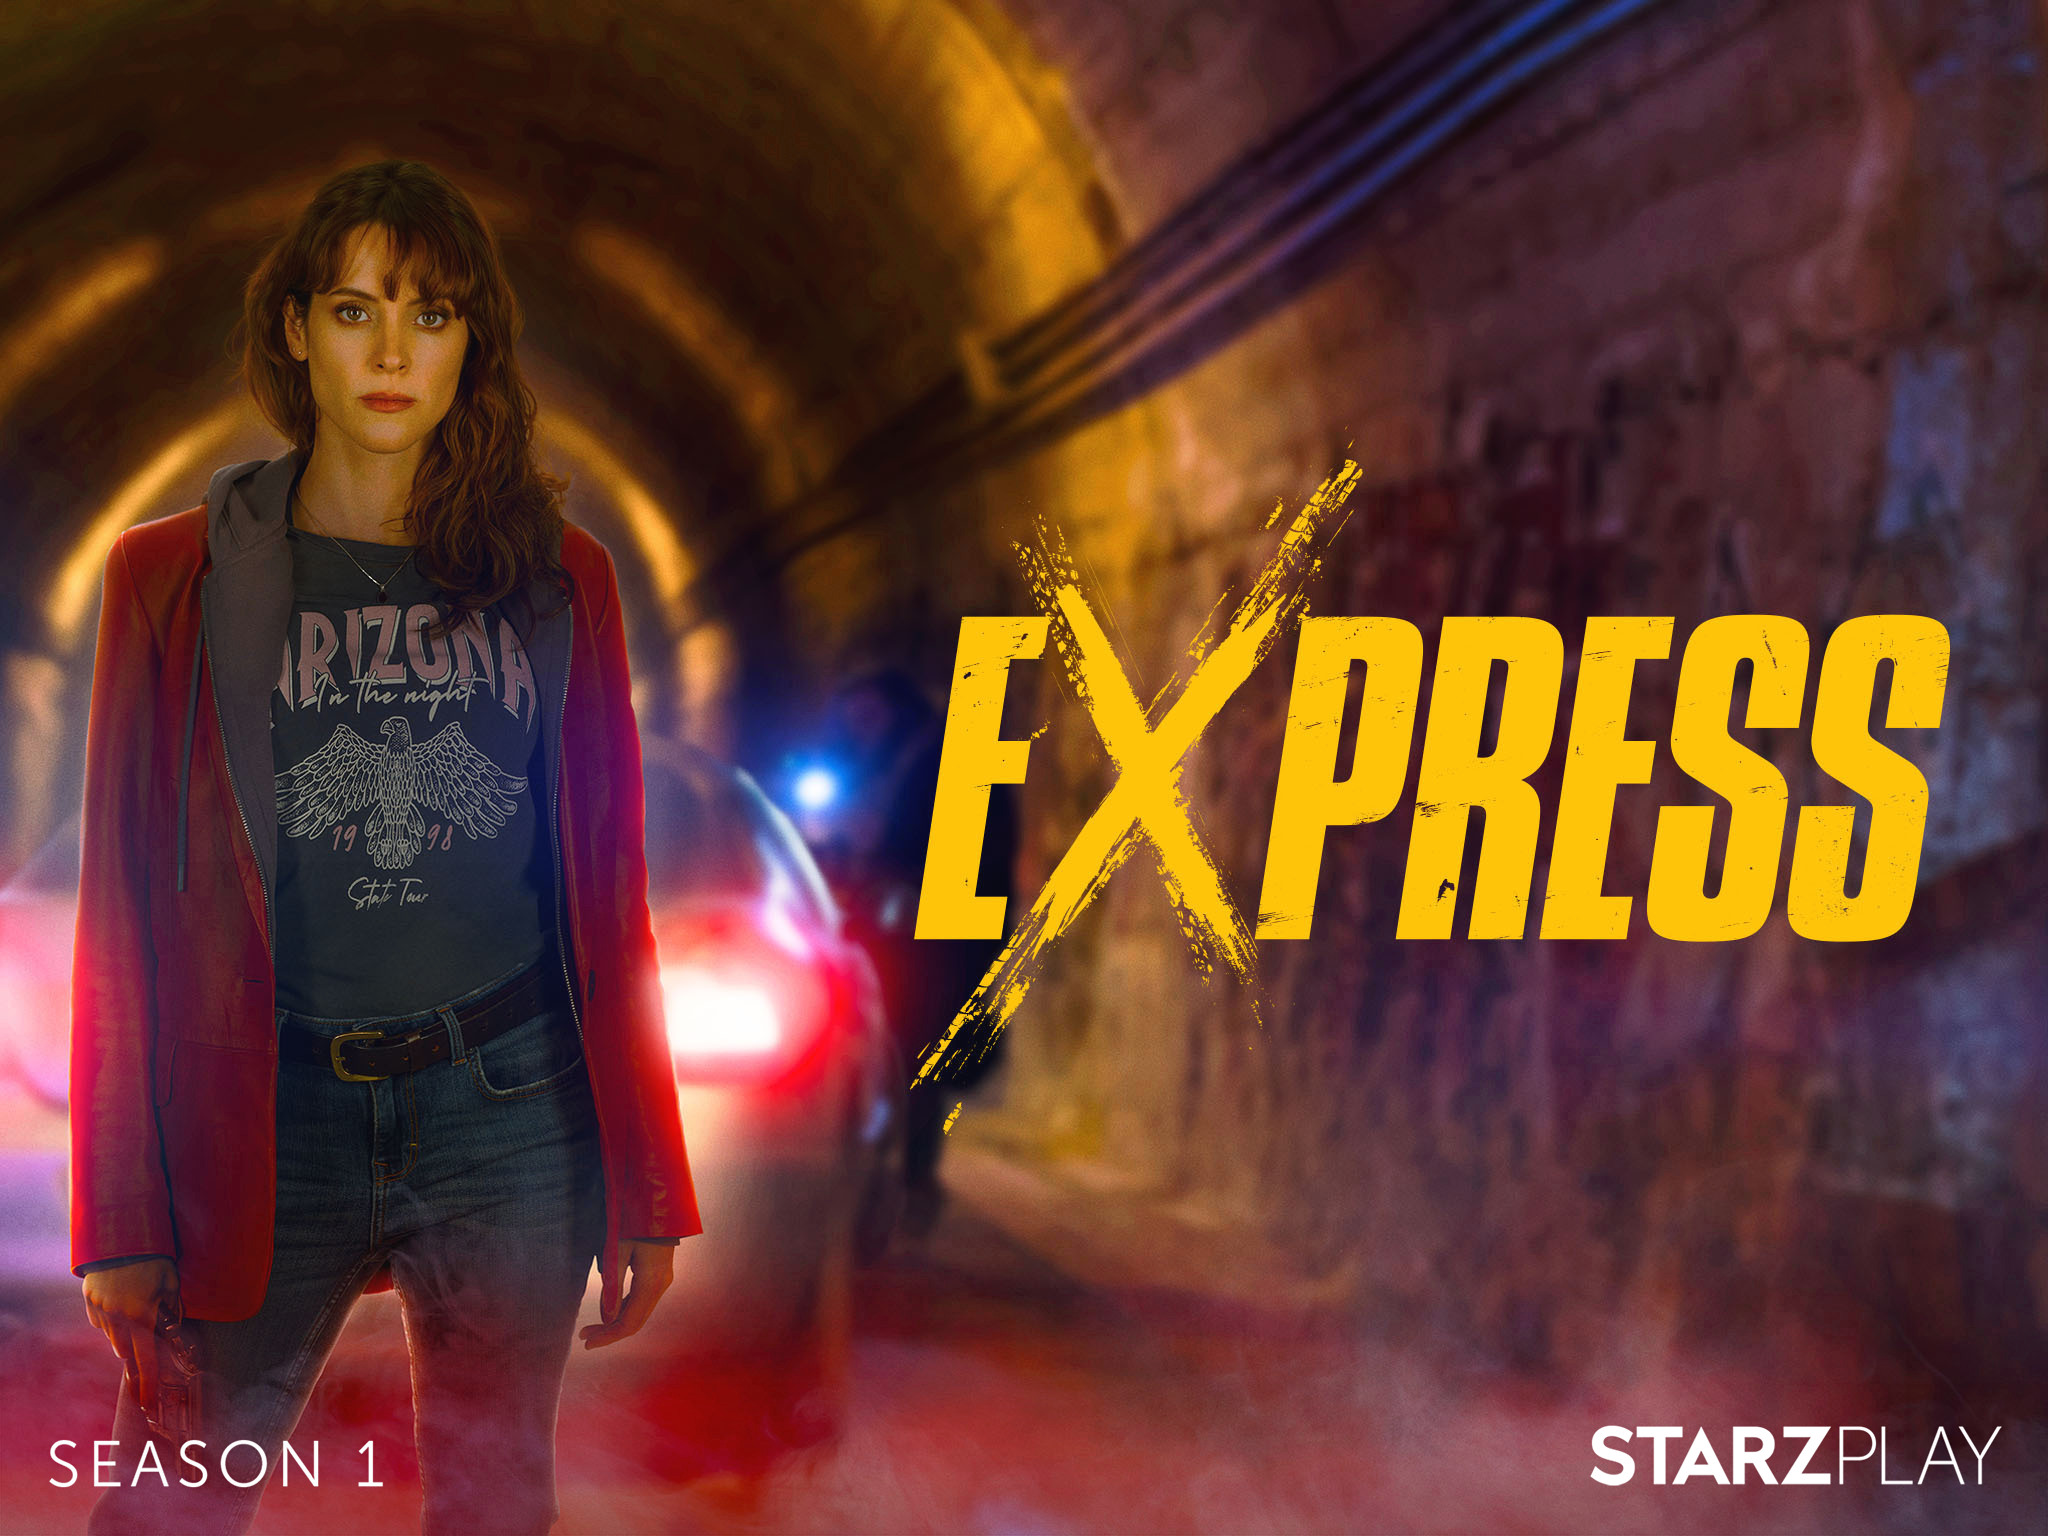 Express Season 2